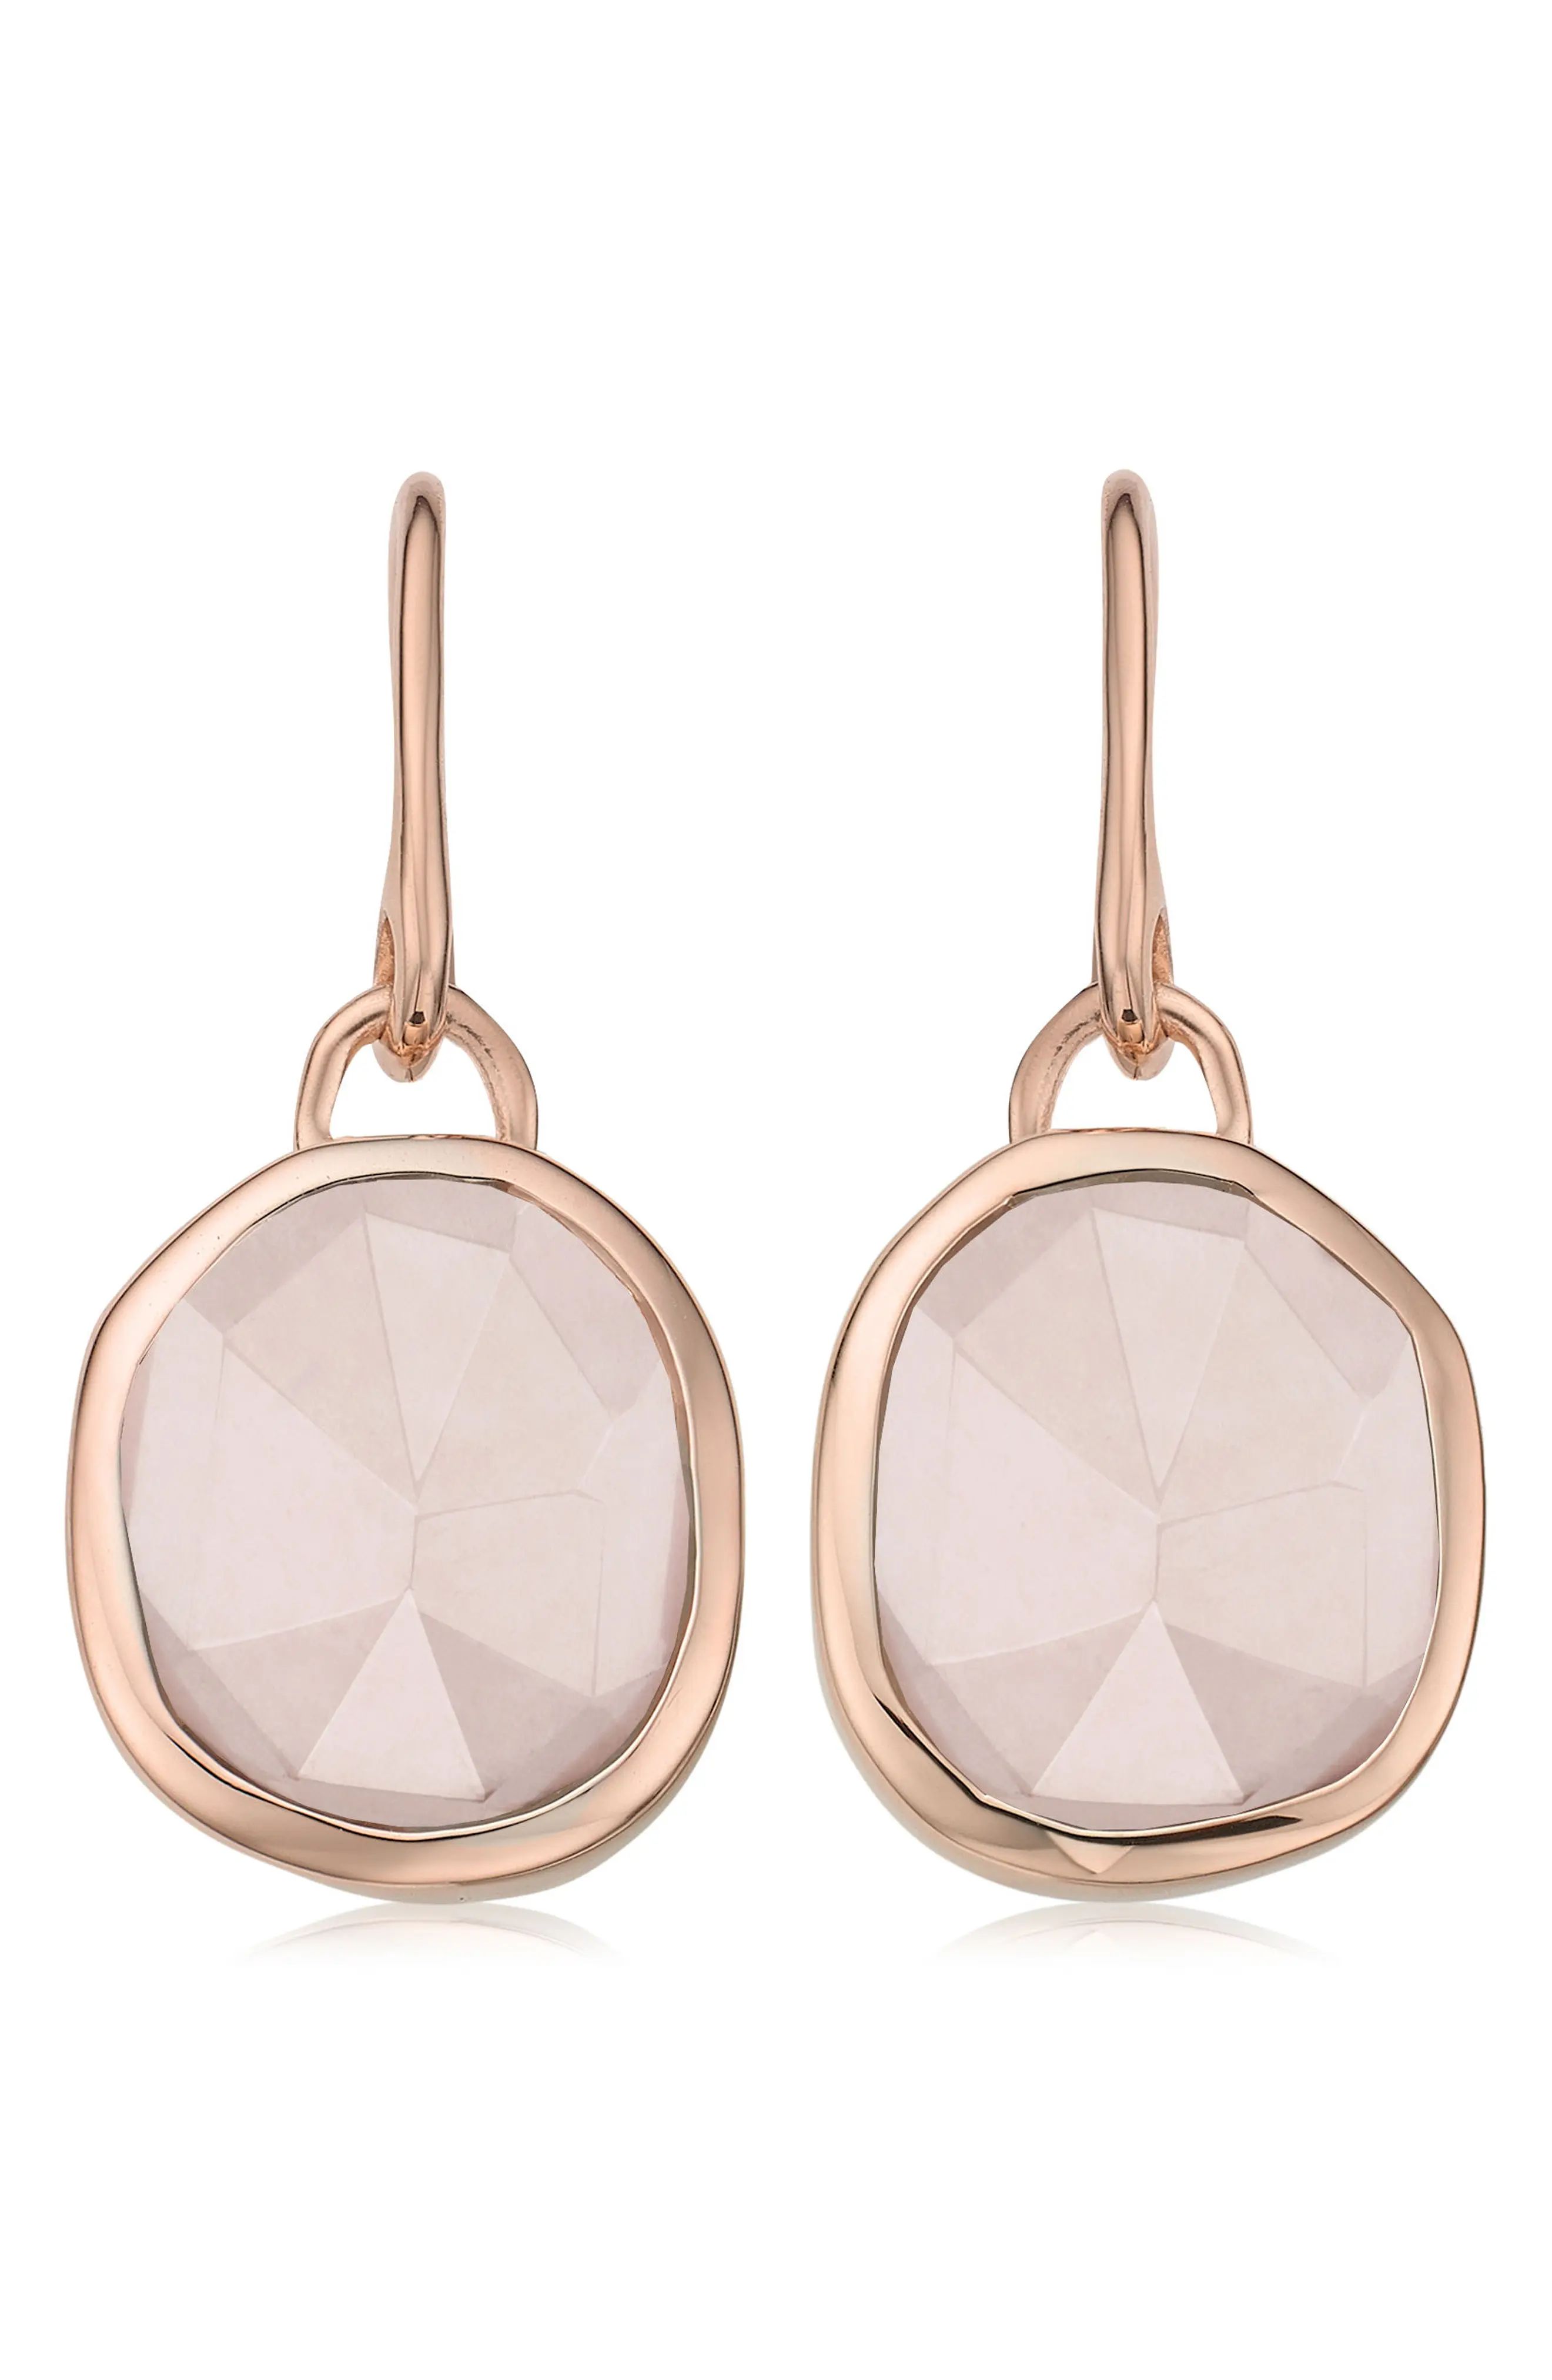 Monica Vinader Siren Semiprecious Stone Drop Earrings in Rose Gold/Rose Quartz at Nordstrom | Nordstrom